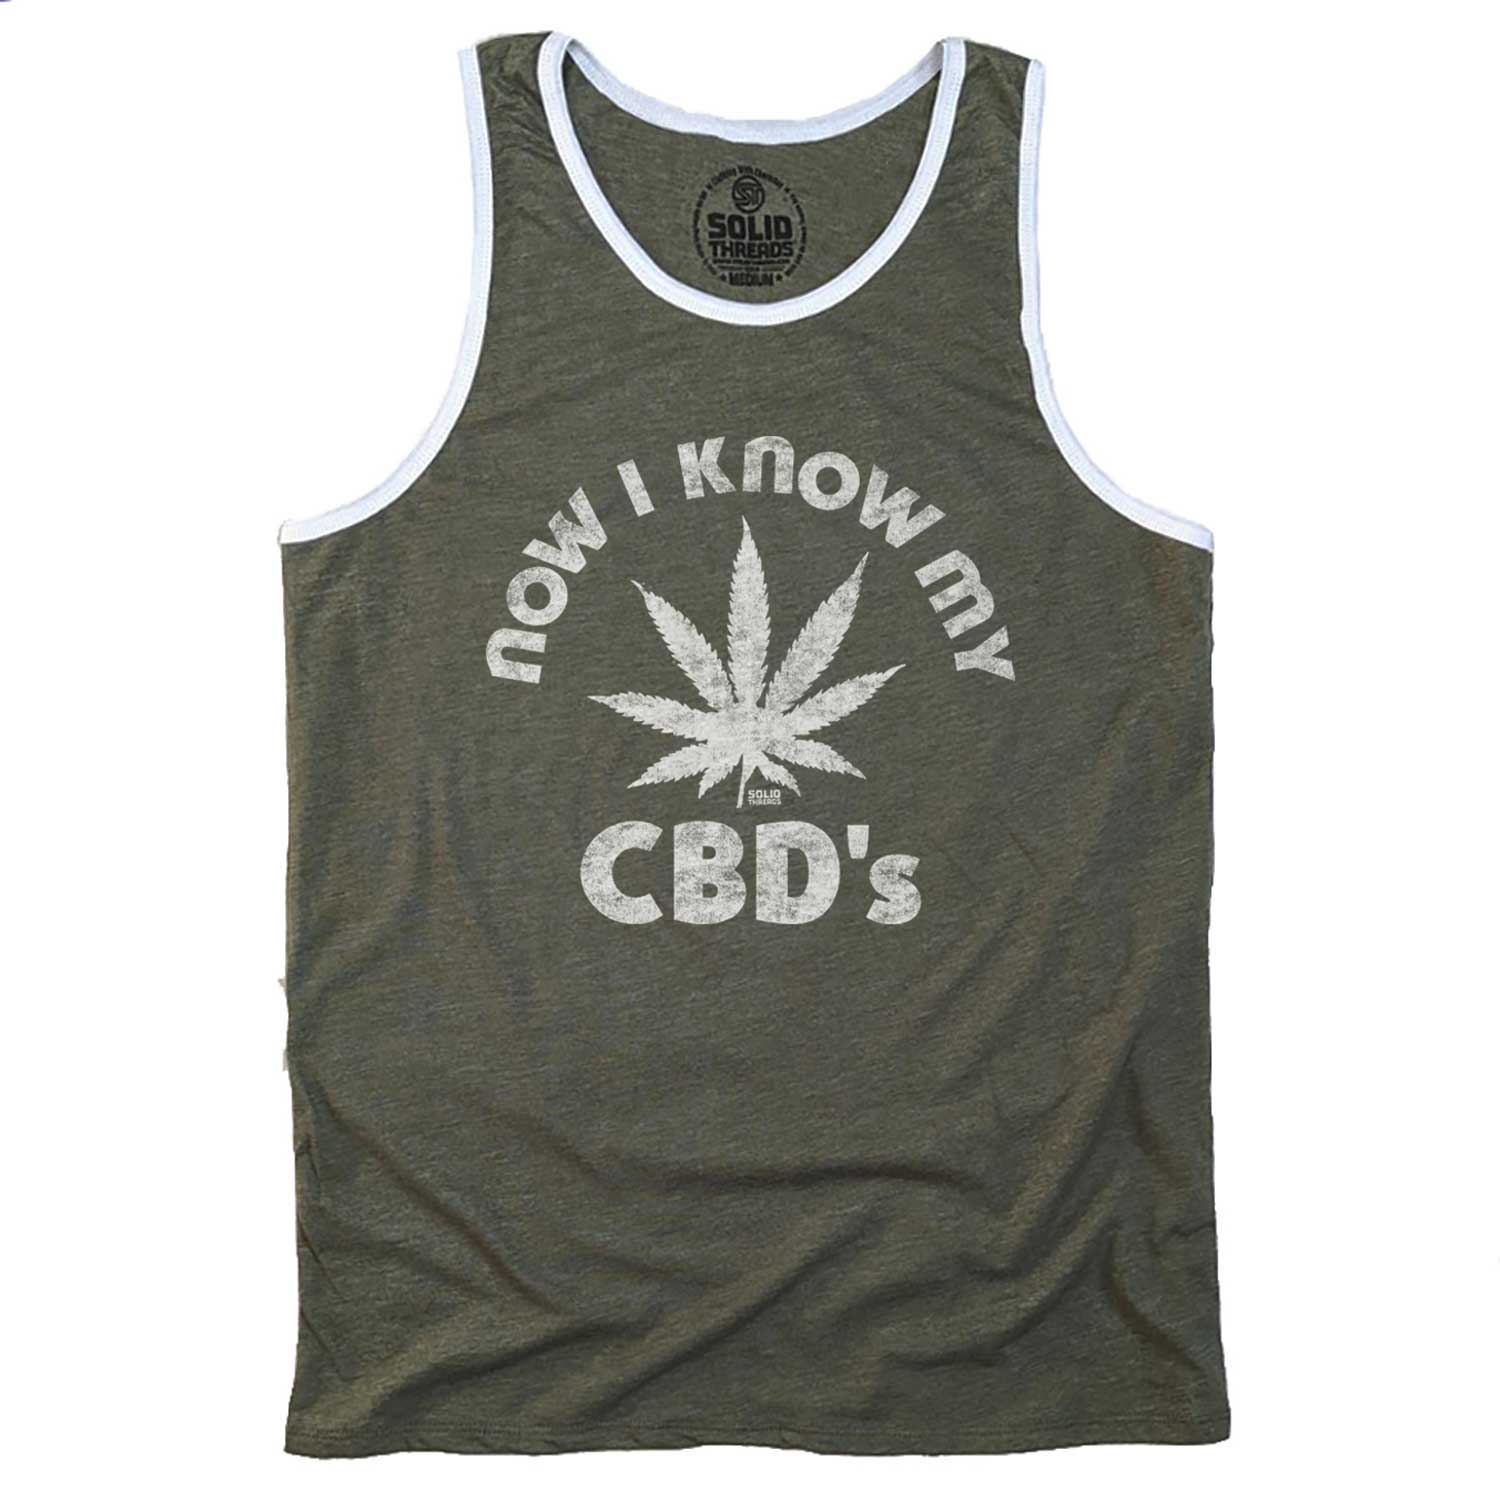 Men's Now I Know My CBD's Vintage Graphic Tank Top | Retro Marijuana T-shirt | Solid Threads